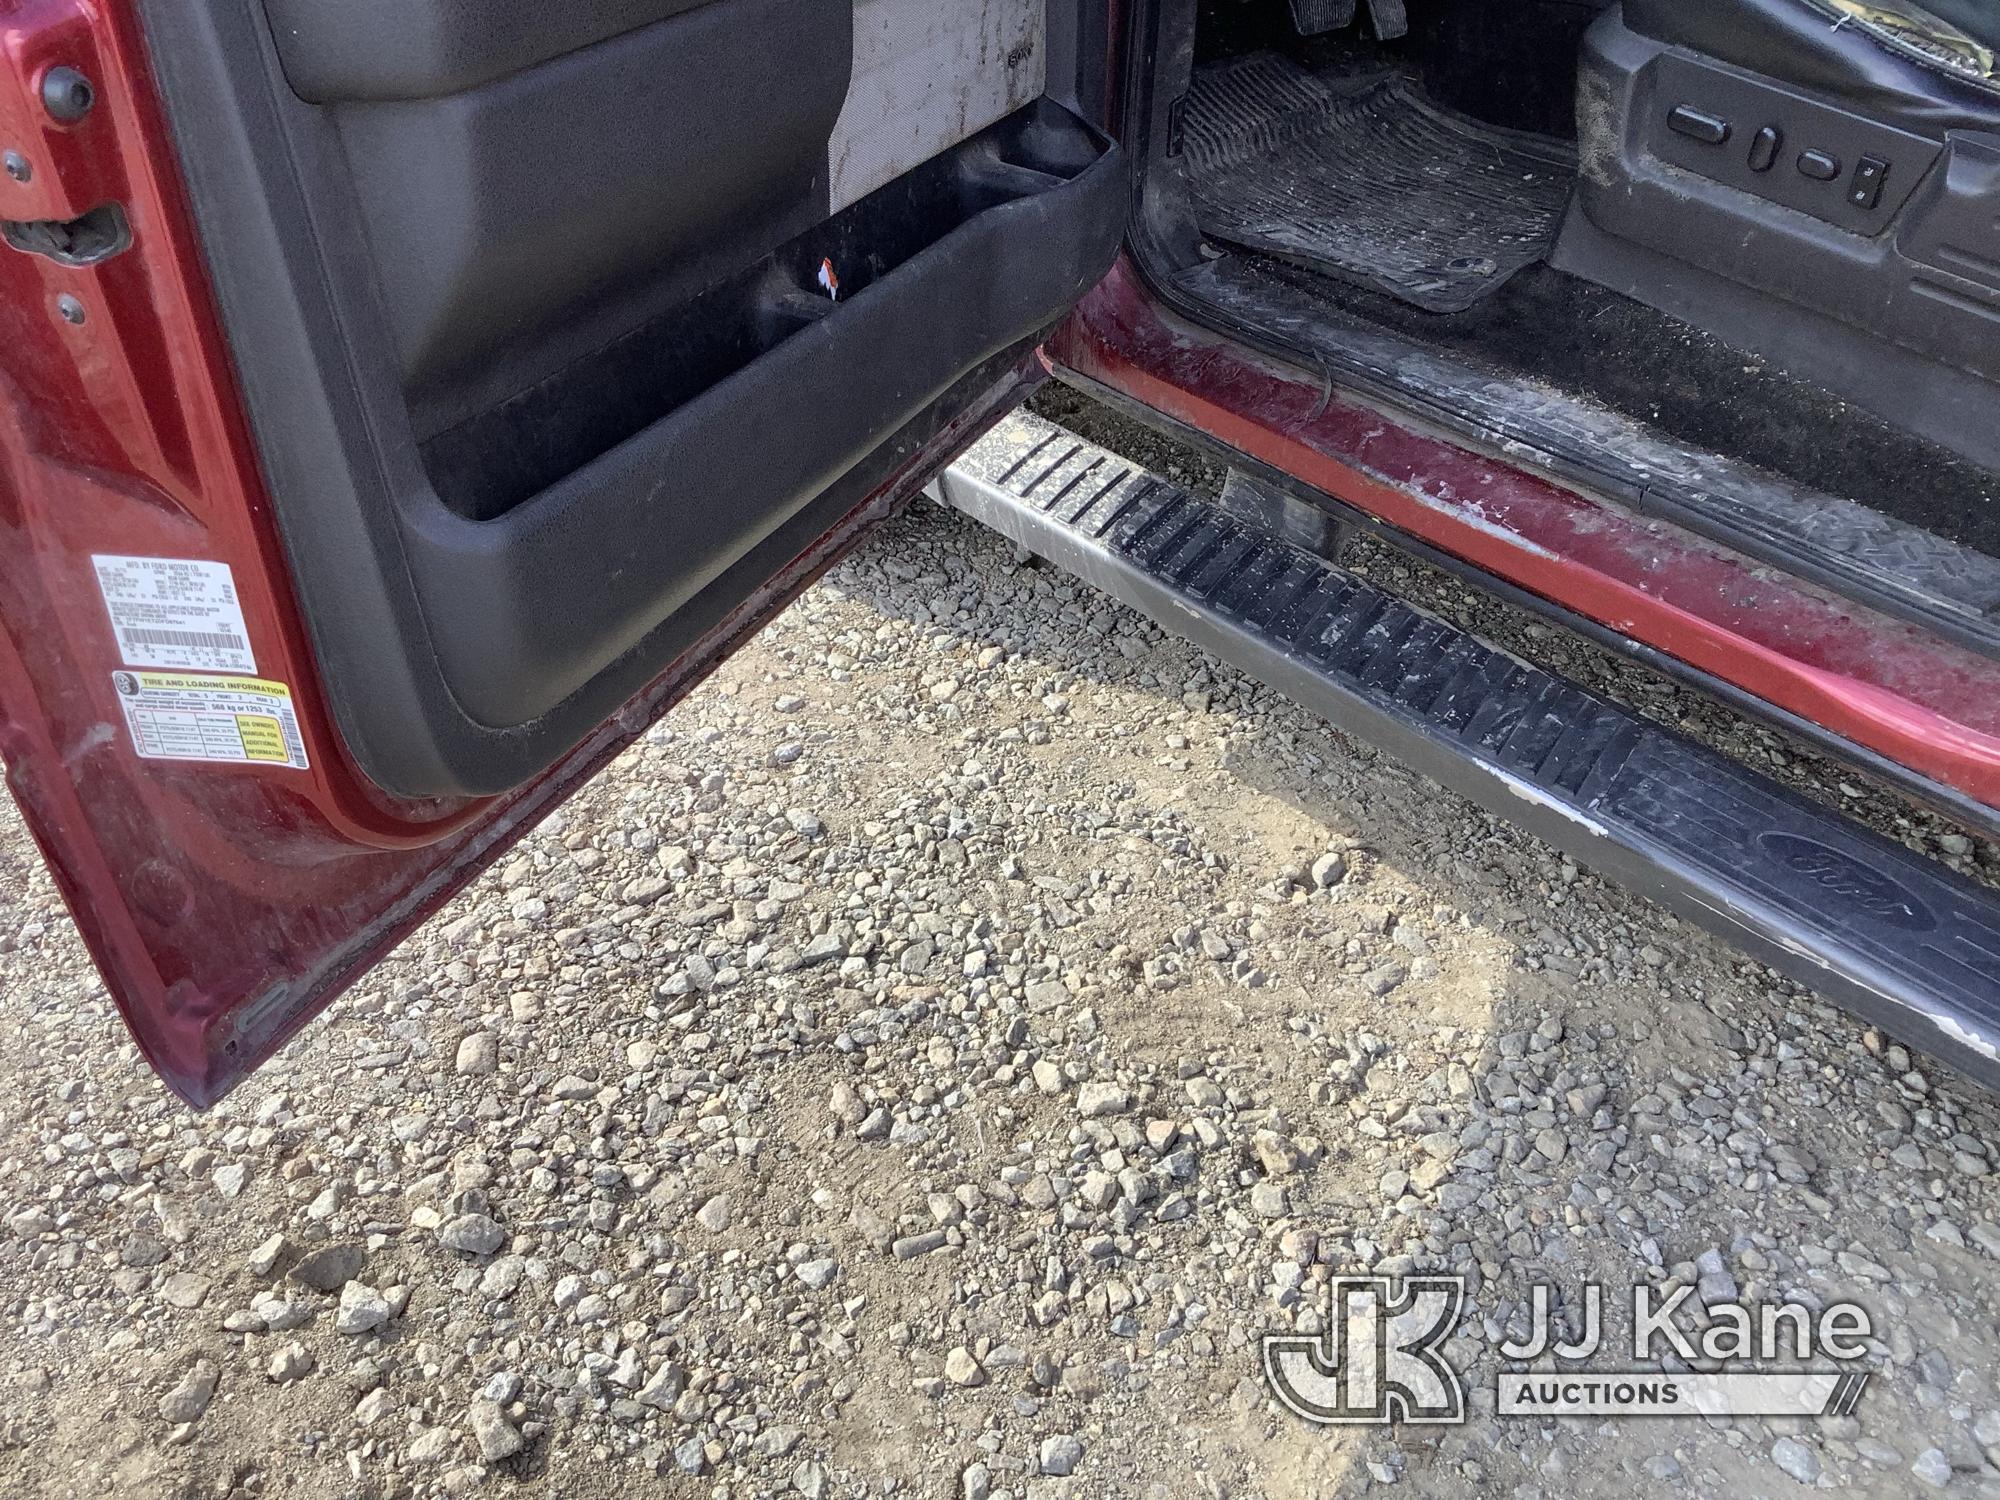 (Shrewsbury, MA) 2013 Ford F150 4x4 Crew-Cab Pickup Truck Runs & Moves) (Rust Damage, Worn Interior